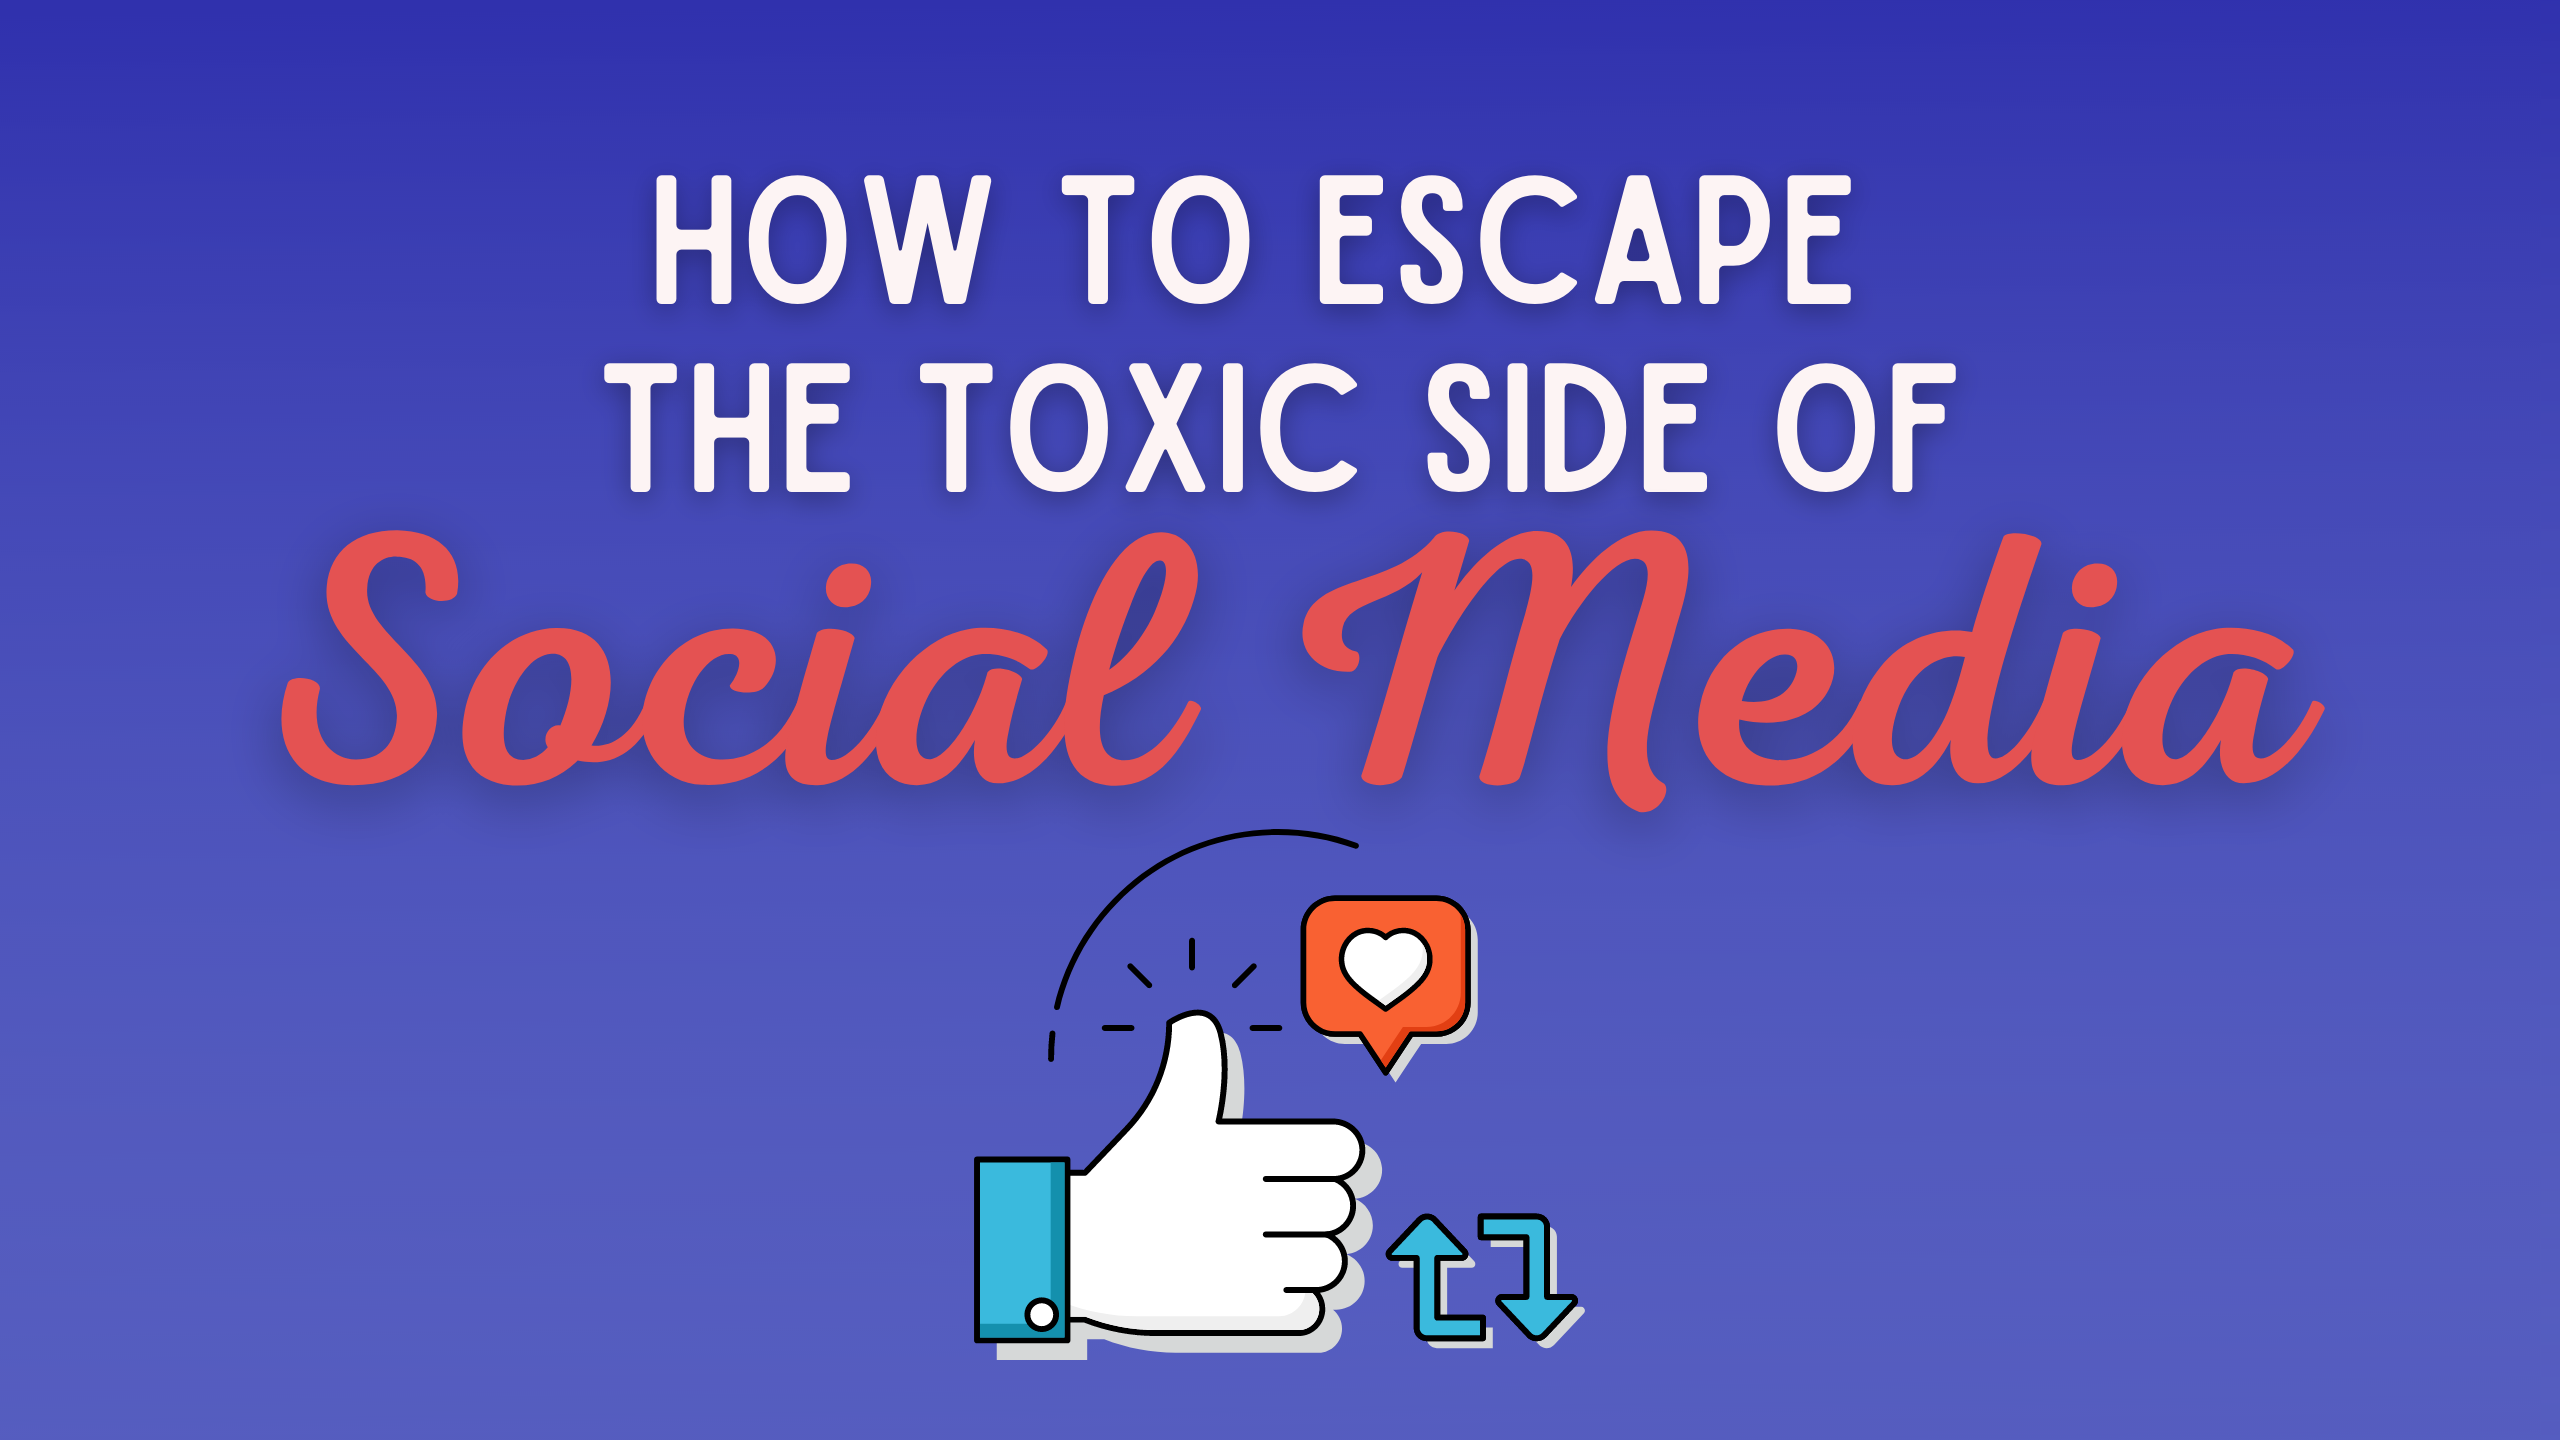 Toxic social media